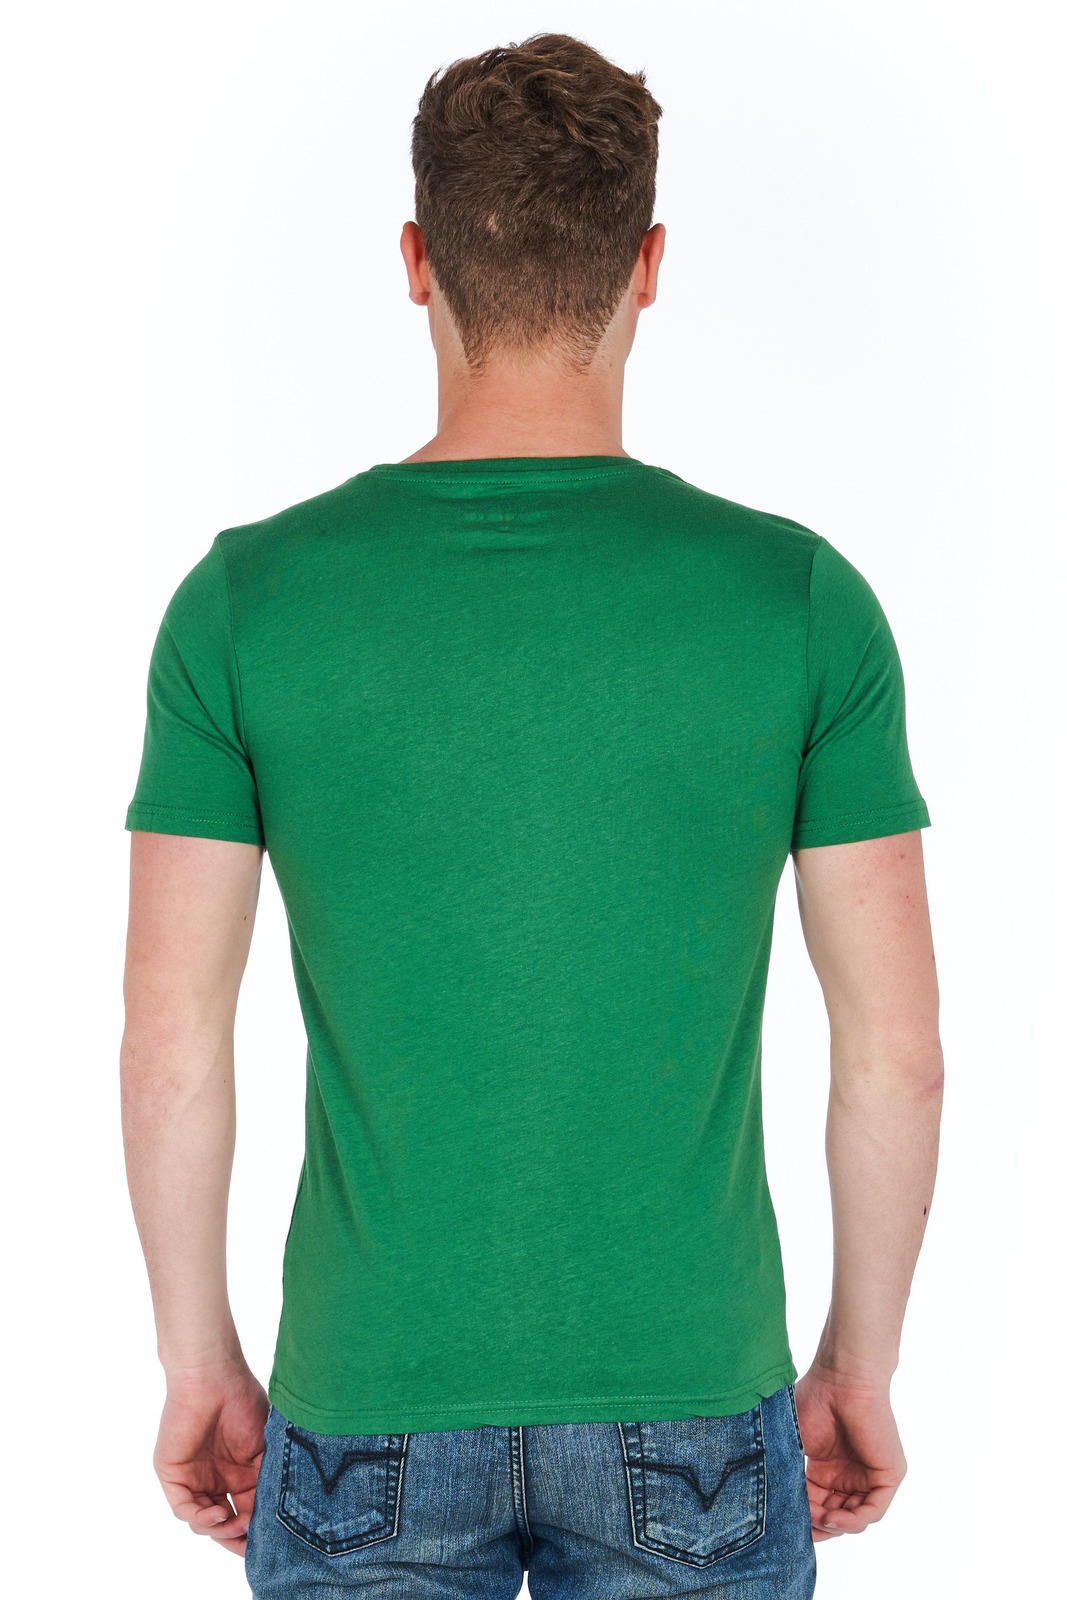 Jeckerson Green T-shirts for Men - LOGO